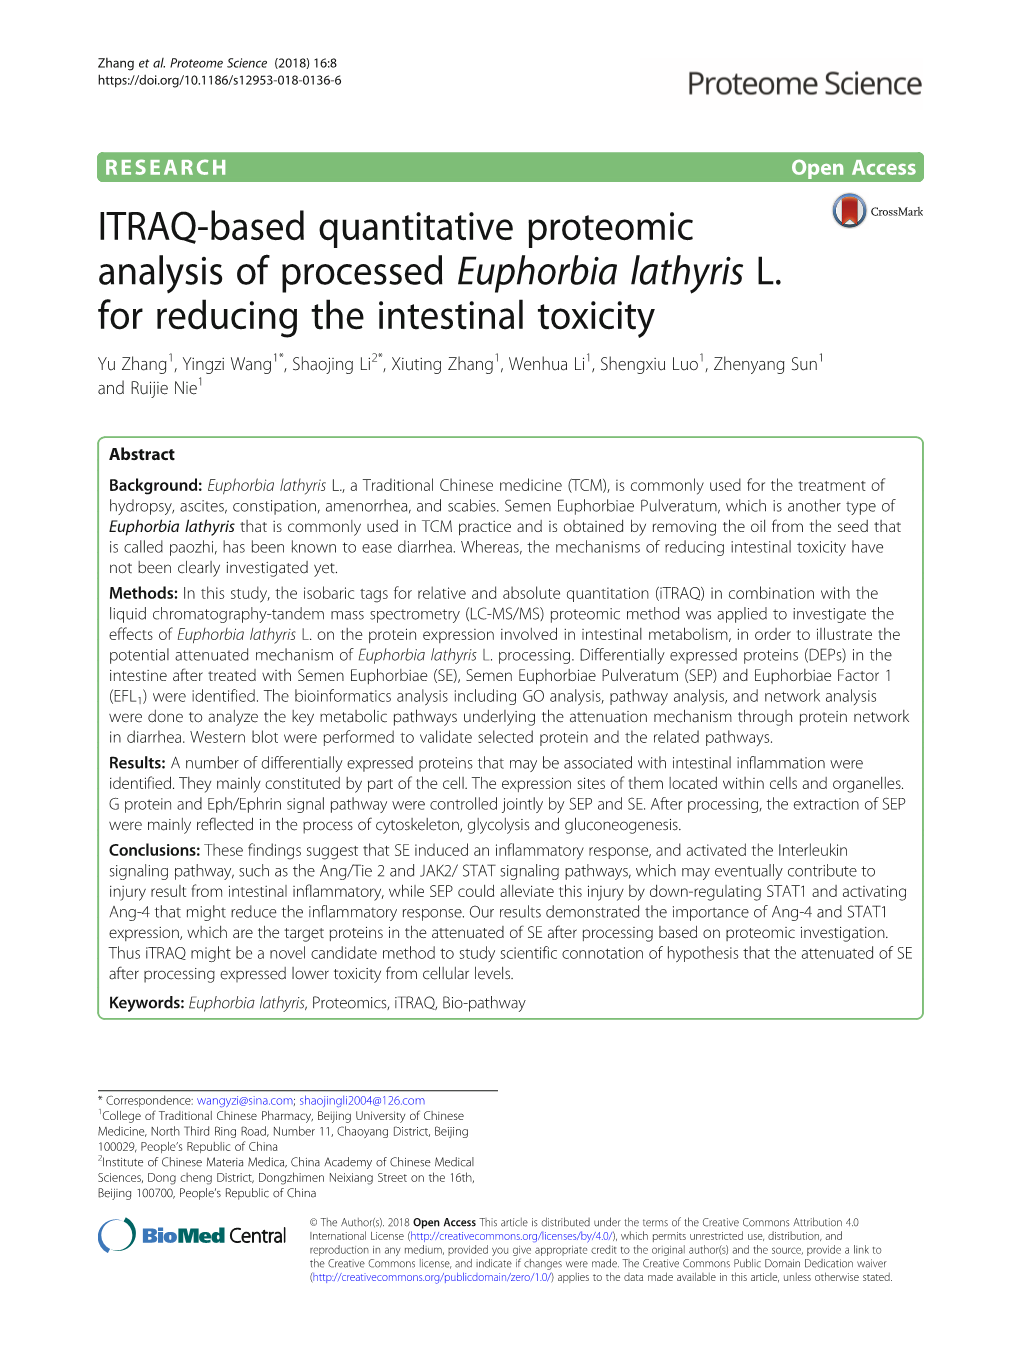 ITRAQ-Based Quantitative Proteomic Analysis of Processed Euphorbia Lathyris L